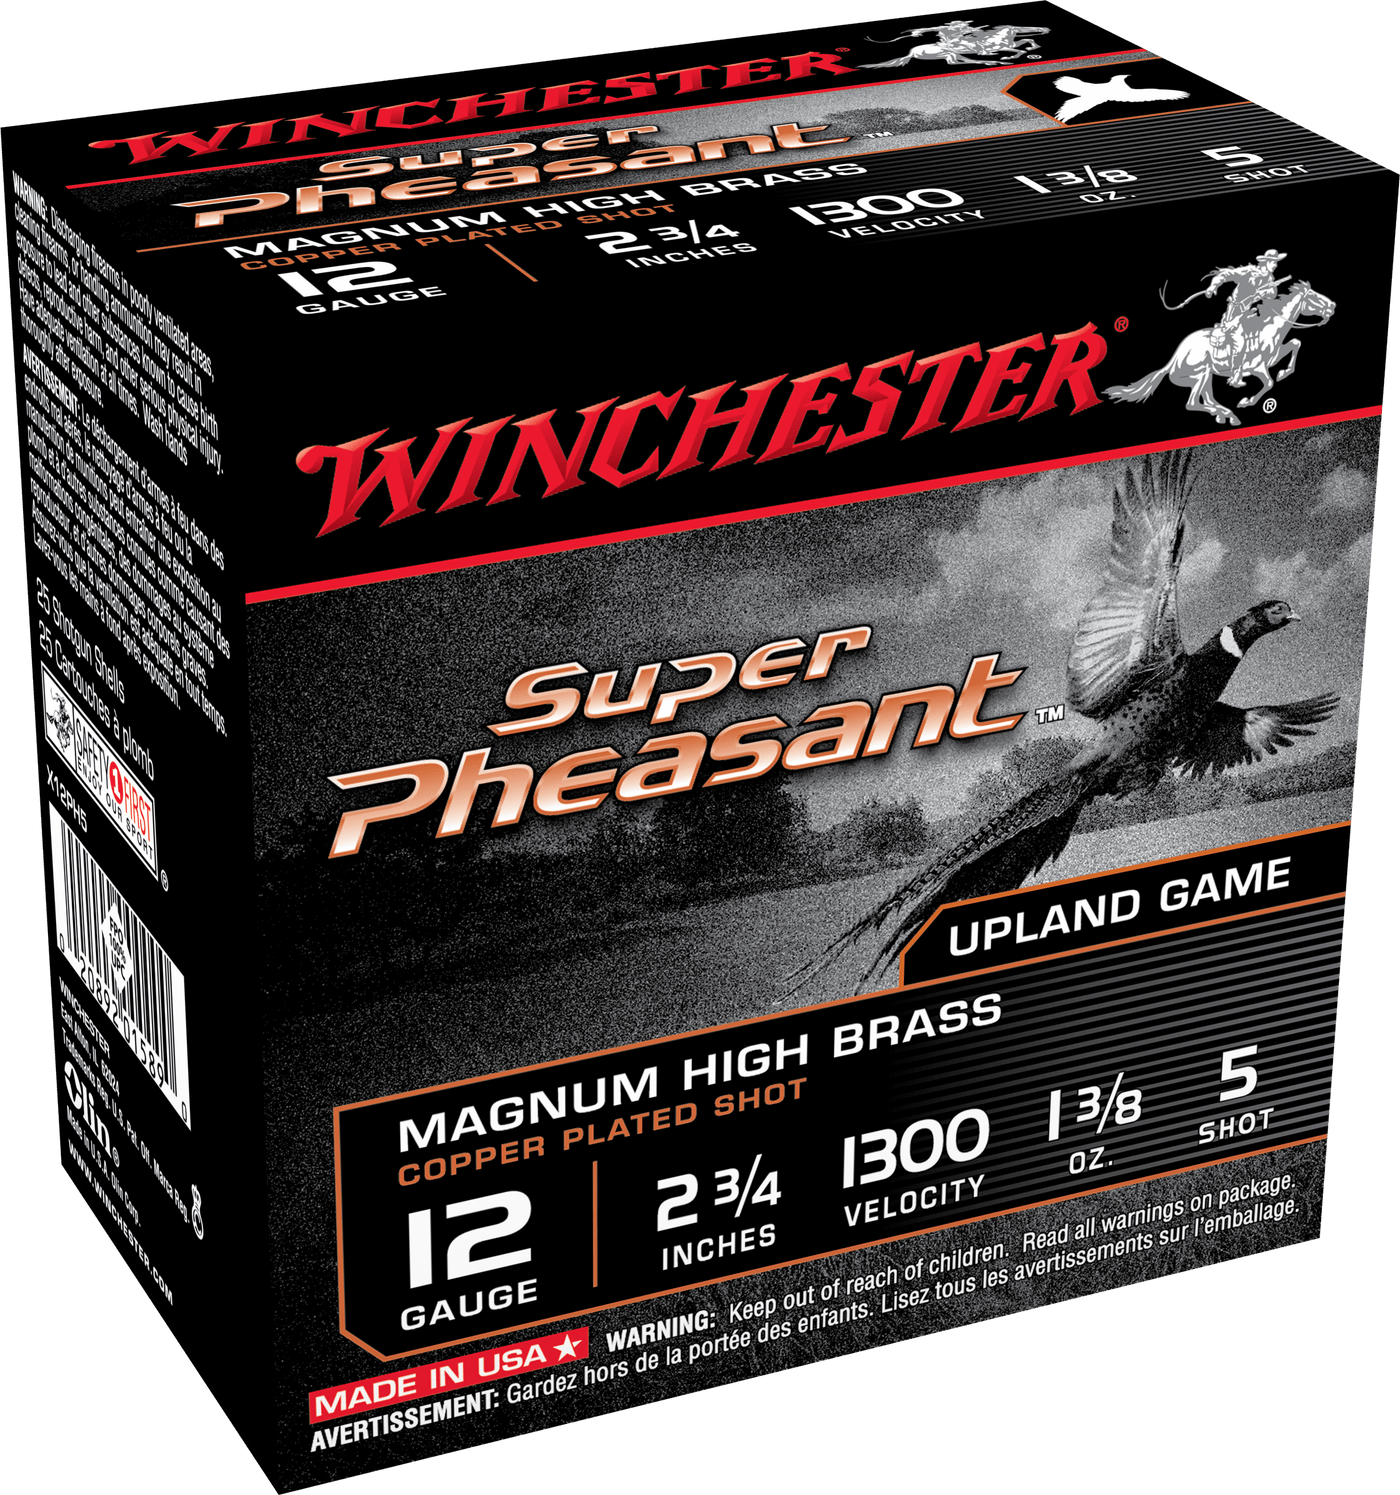 Winchester Ammo Winchester Super Pheasant Shotgun Load 12 Ga. 3 In. 1 3/8 Oz. Magnum Hb 5 Shot 25 Rd. Ammo